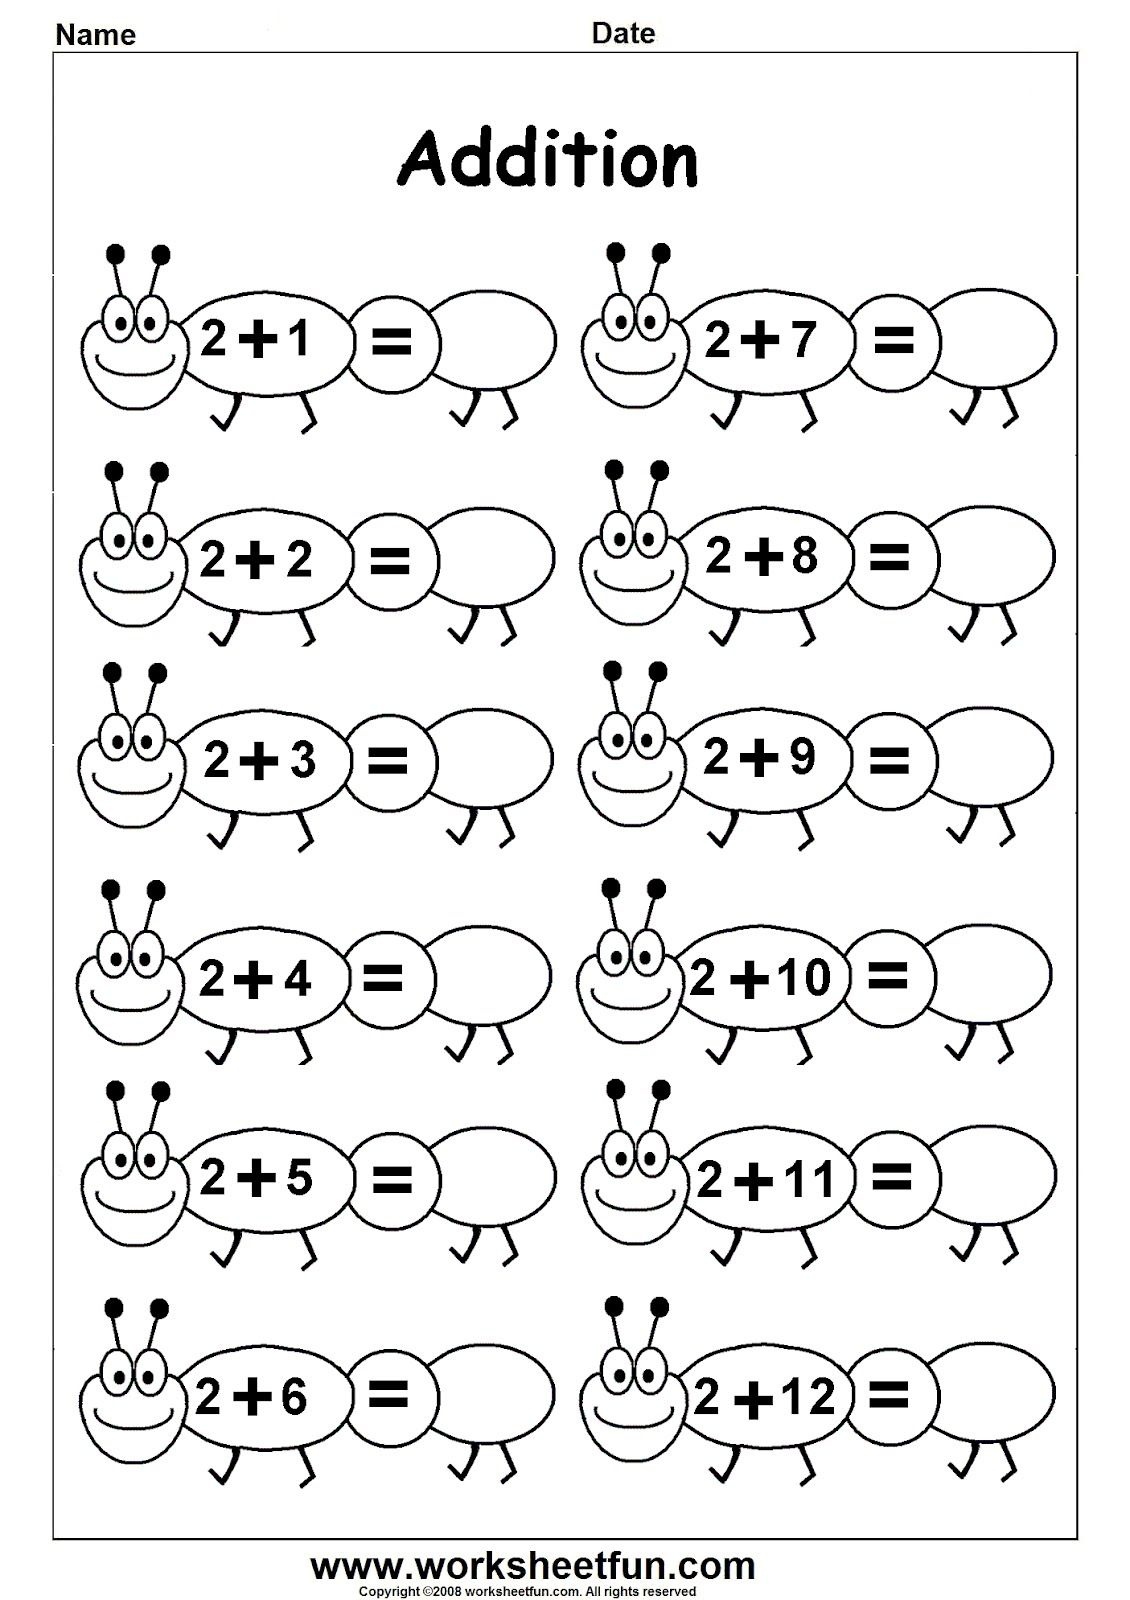 Worksheetfun - Free Printable Worksheets | Boys And Girls Club - Free Printable Kindergarten Math Activities